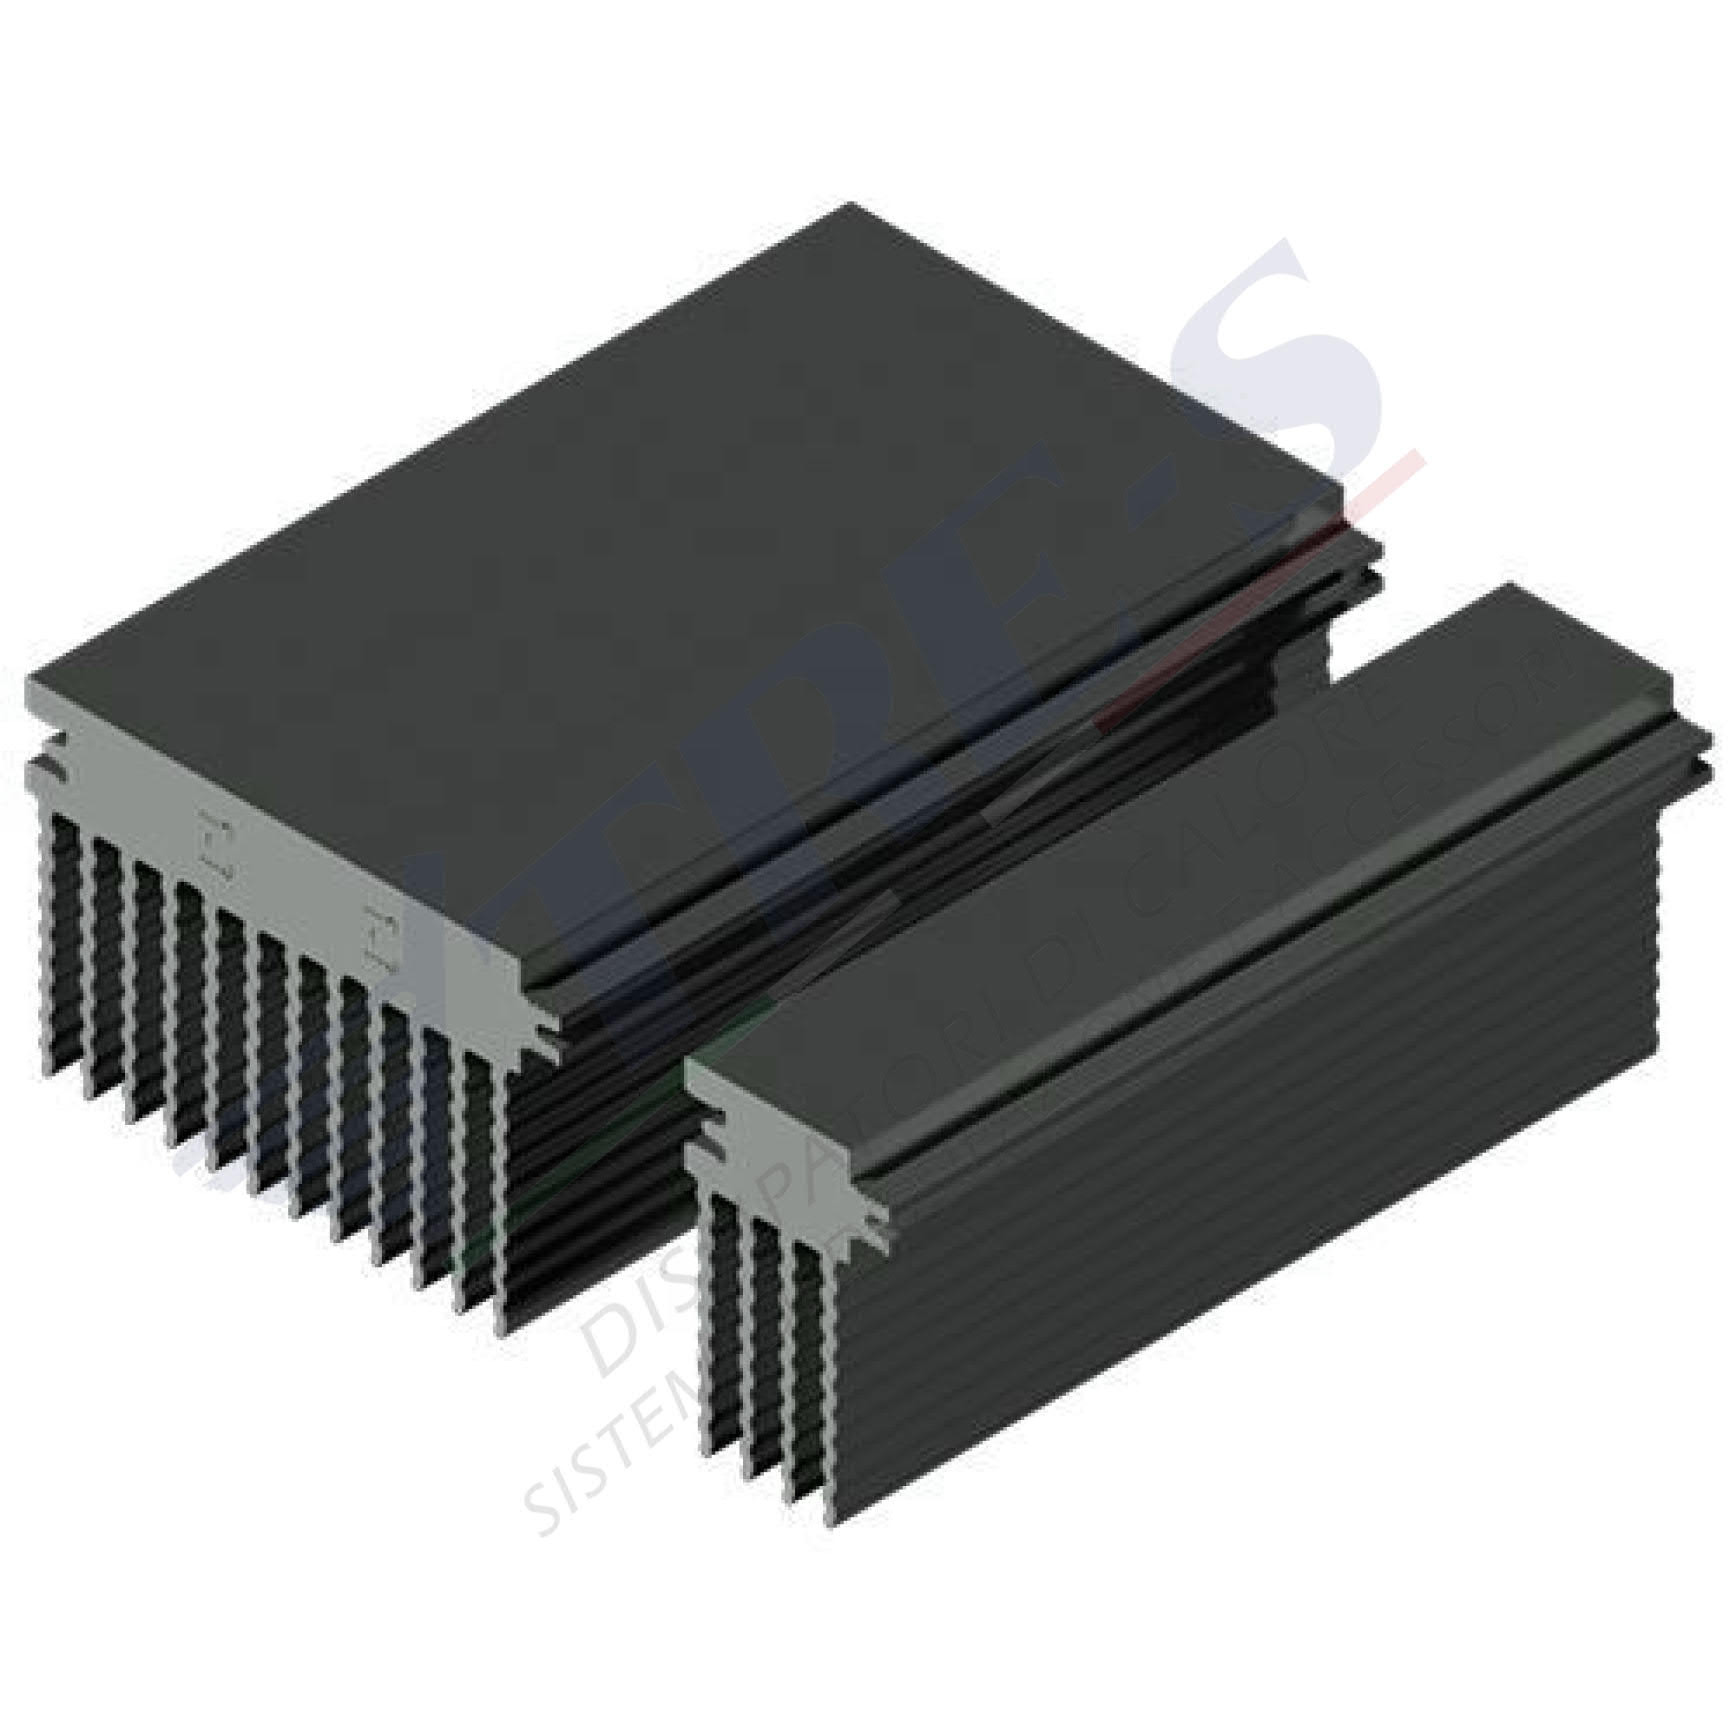 PRI1005 - Embedded heat sinks